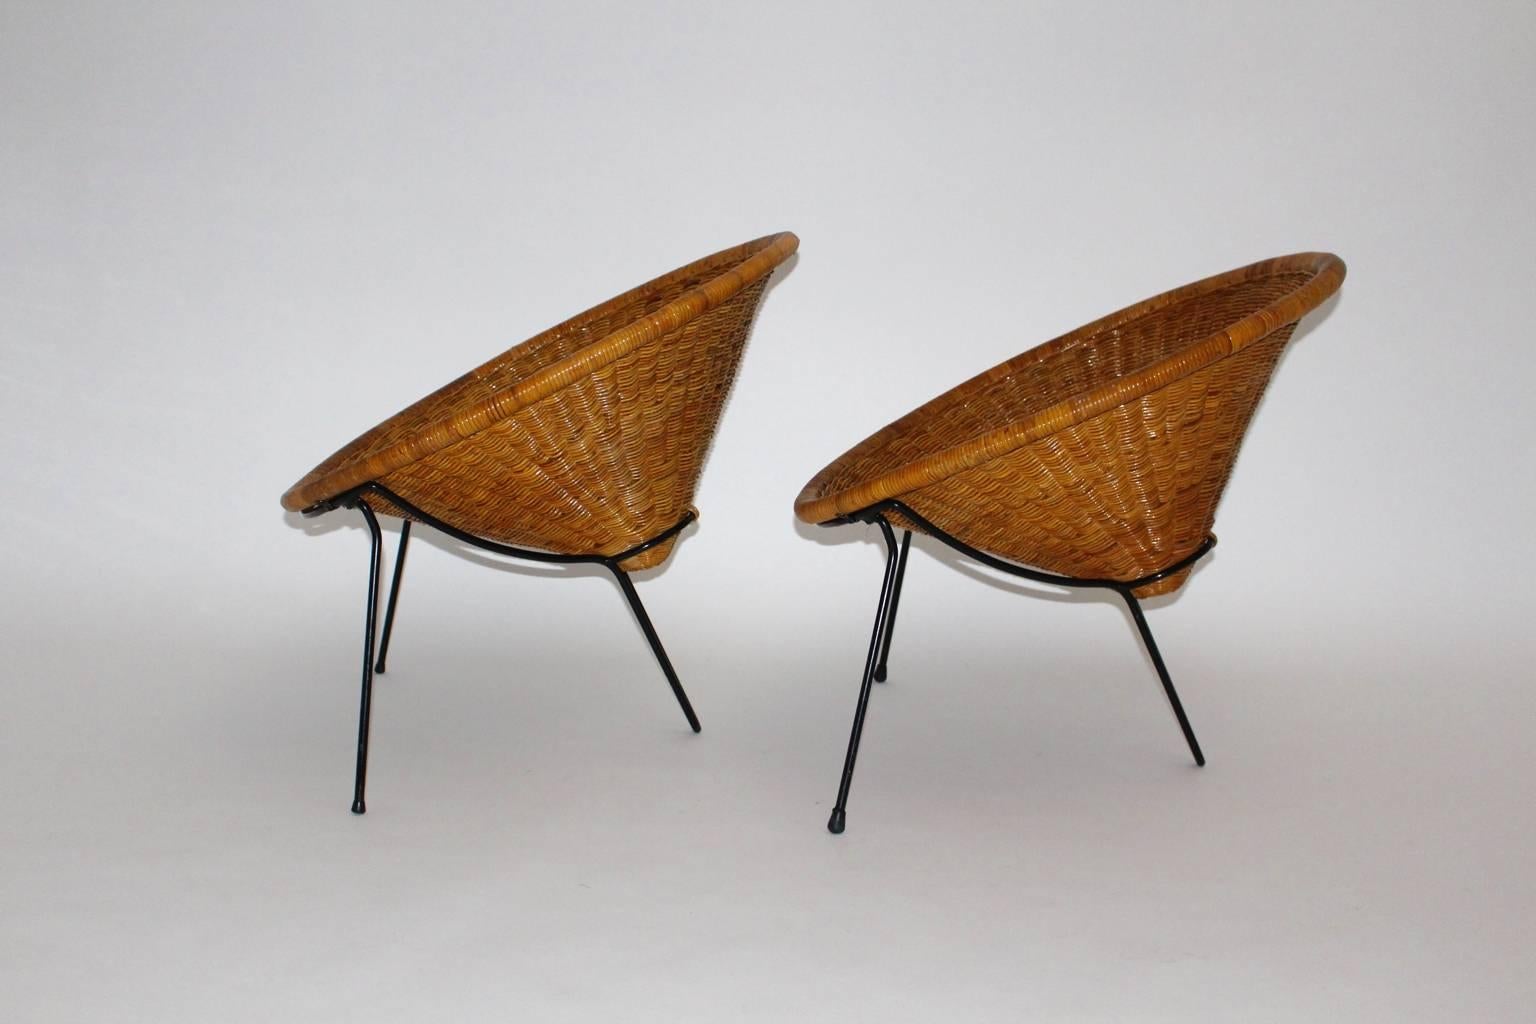 1950's rattan furniture